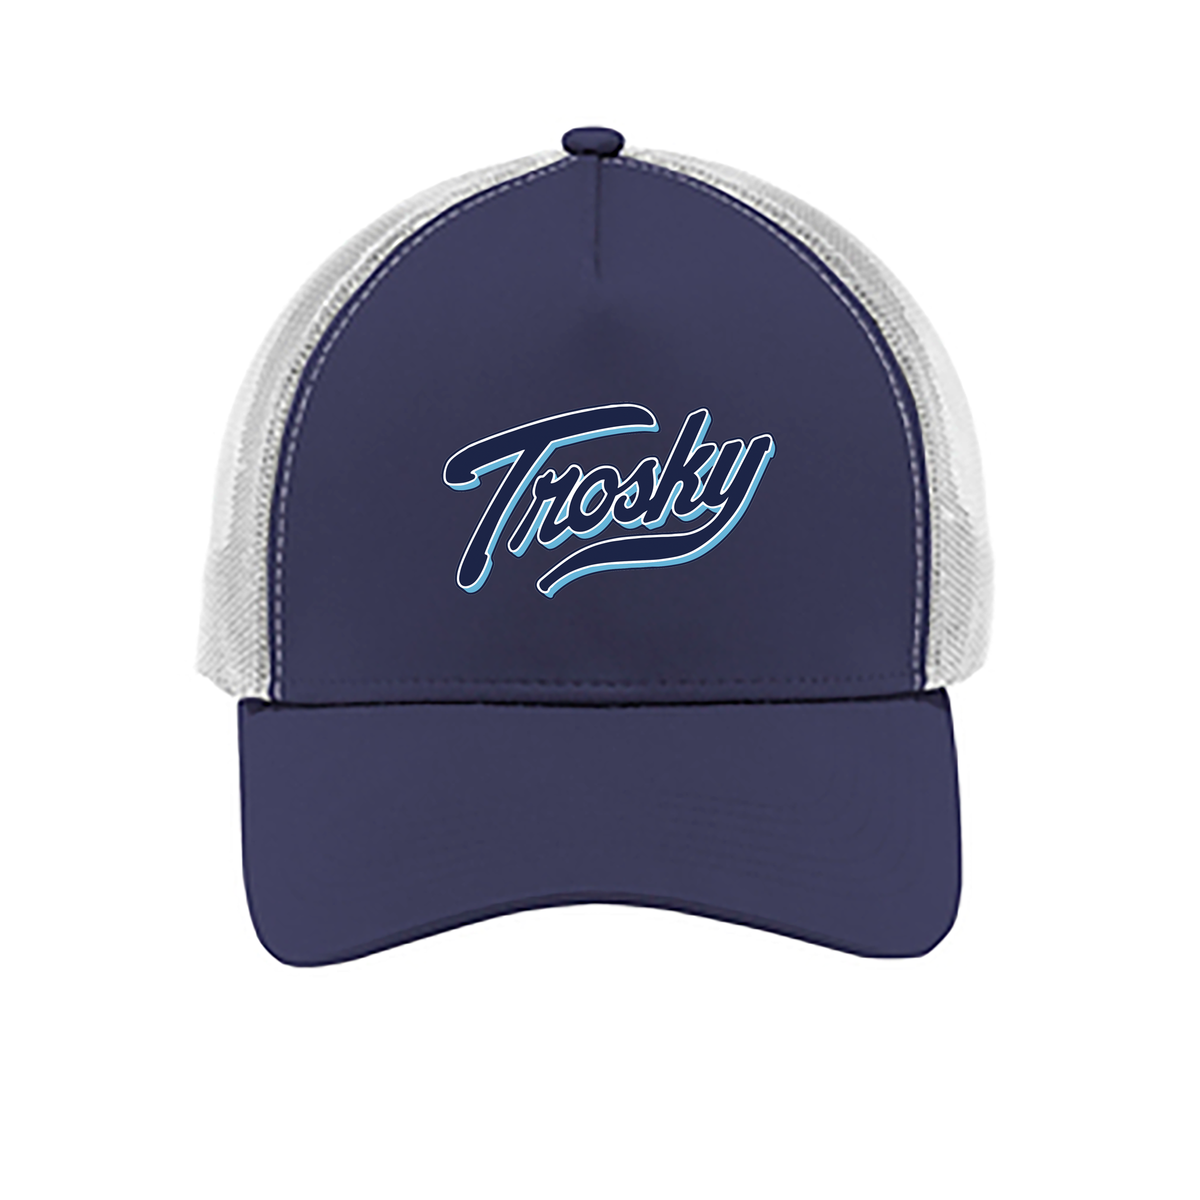 Trosky Baseball PosiCharge Competitor Mesh Back Cap